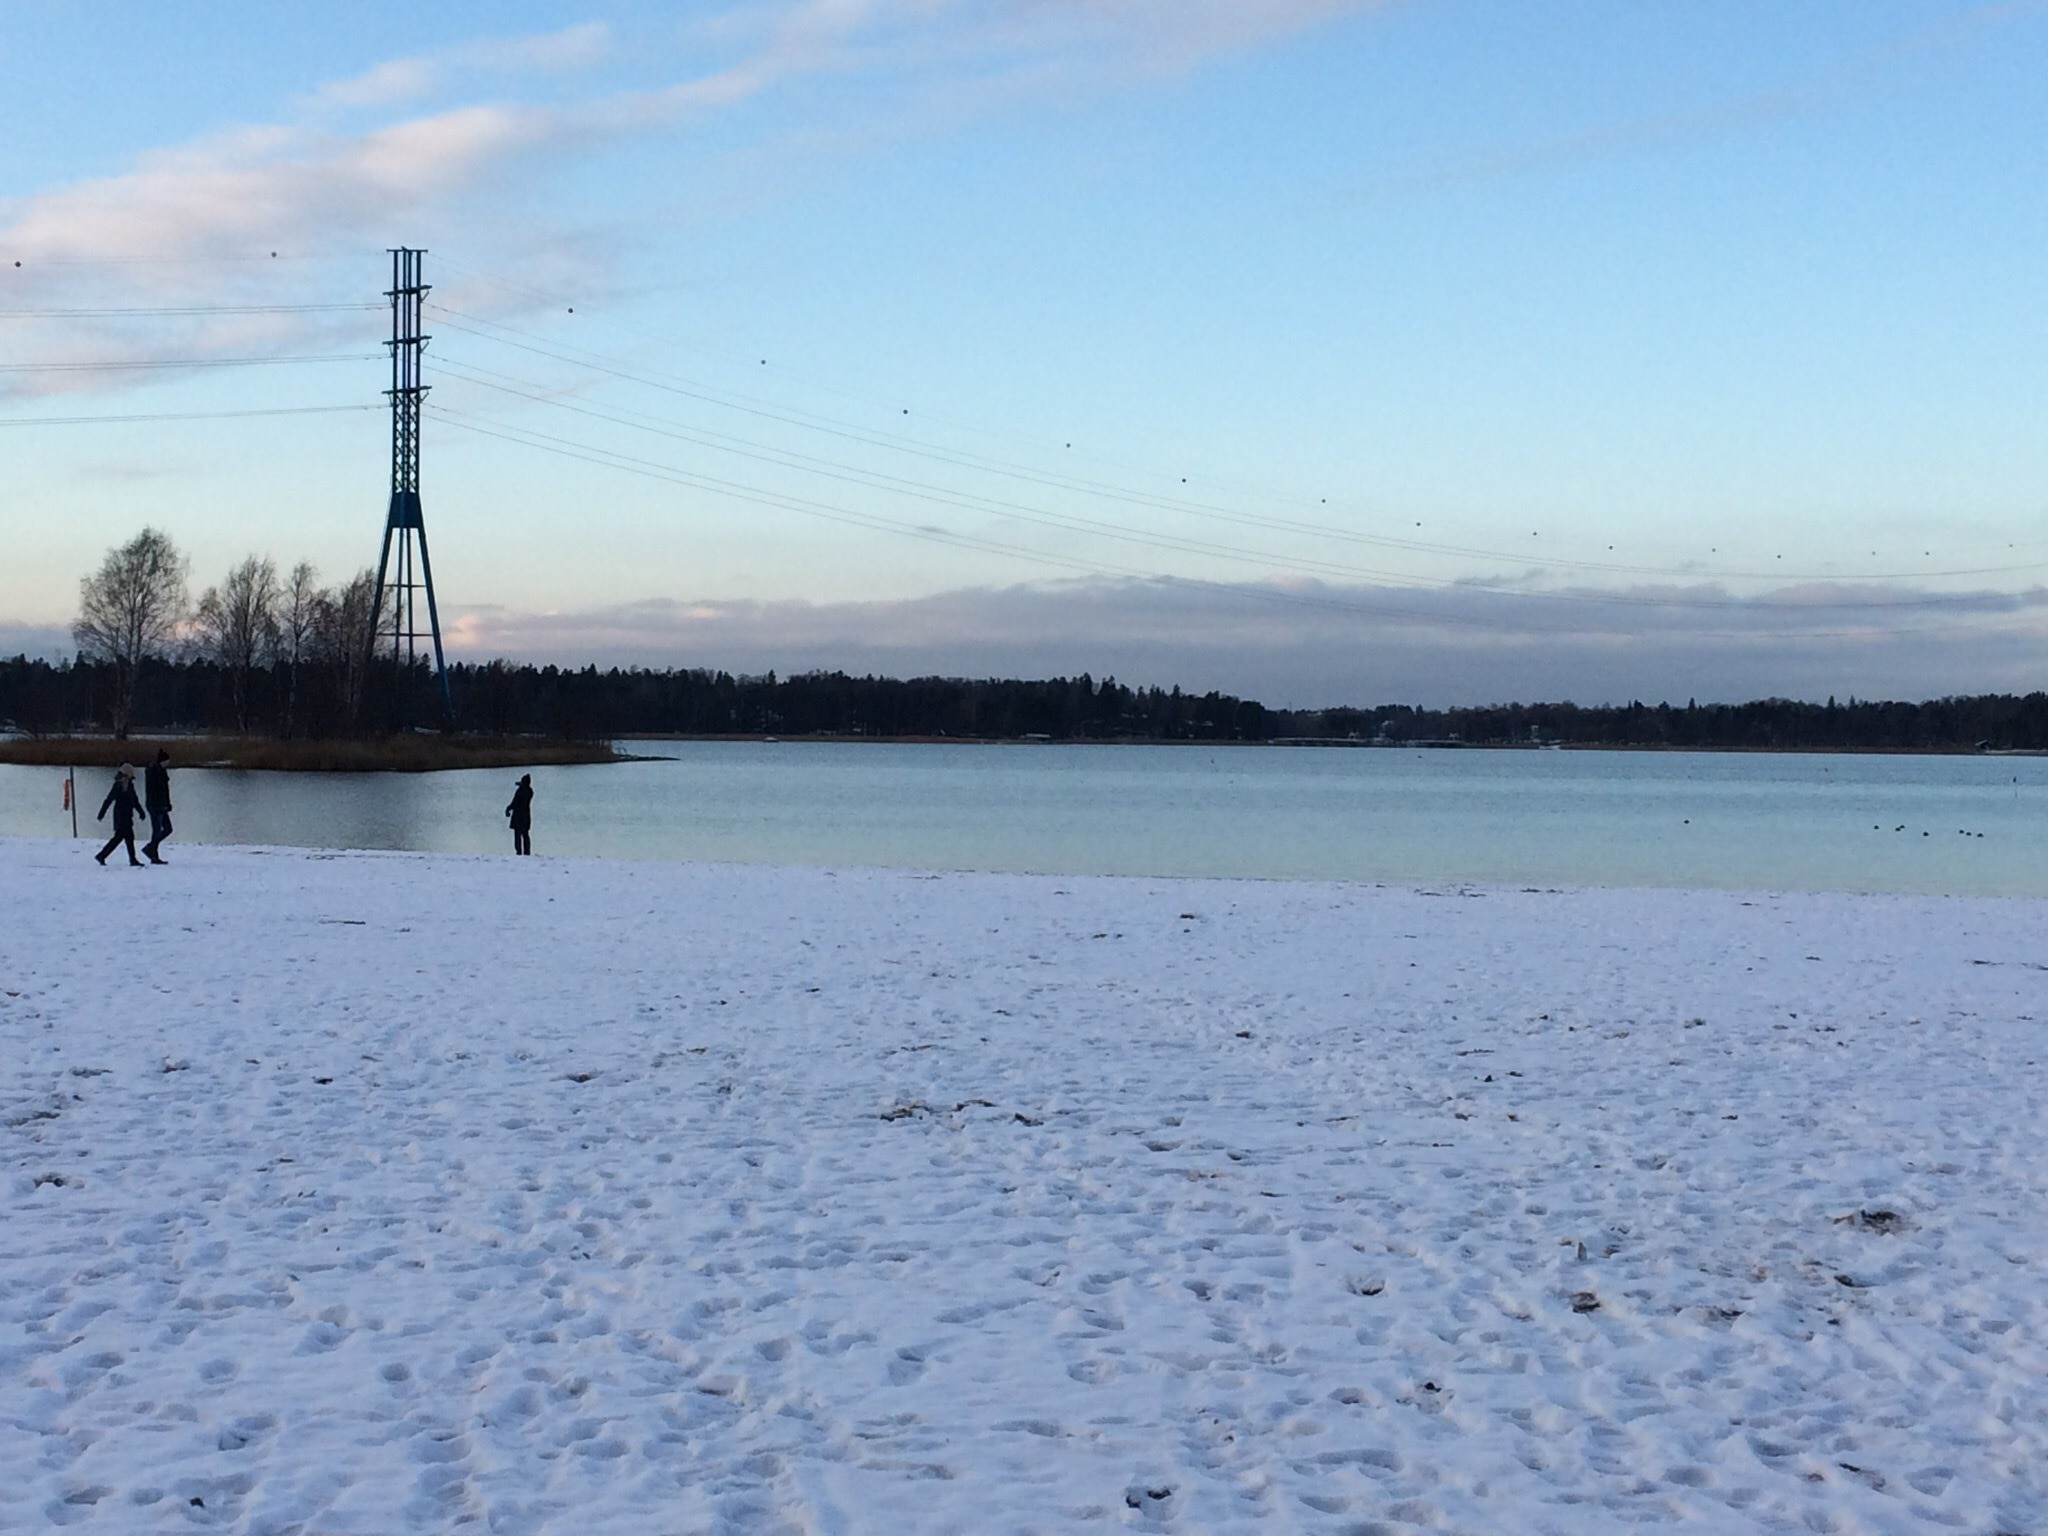 The snowy beach in the Finnish Winter!! #snowtrove